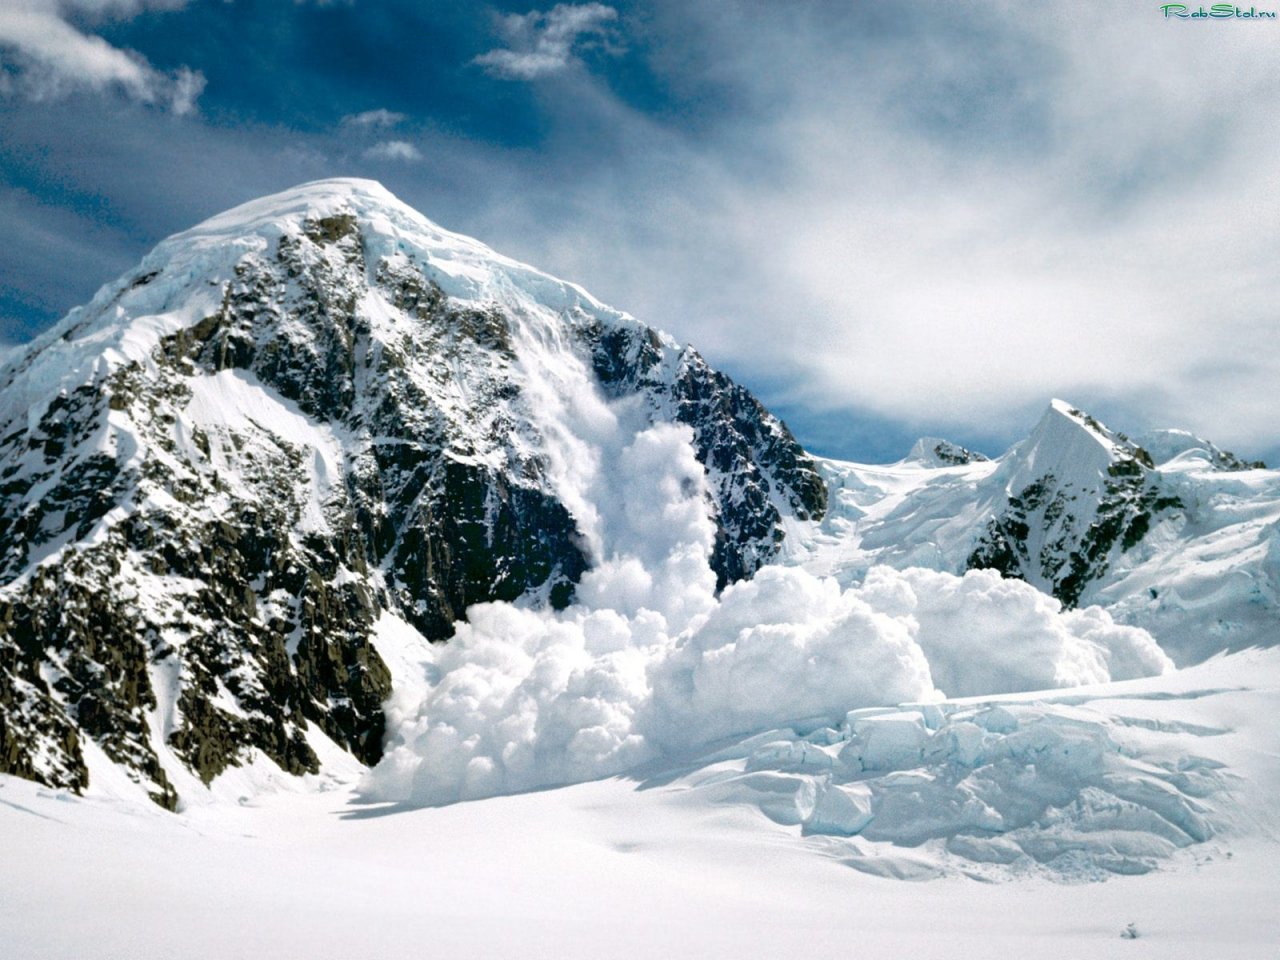 French Alps avalanche kills seven climbers